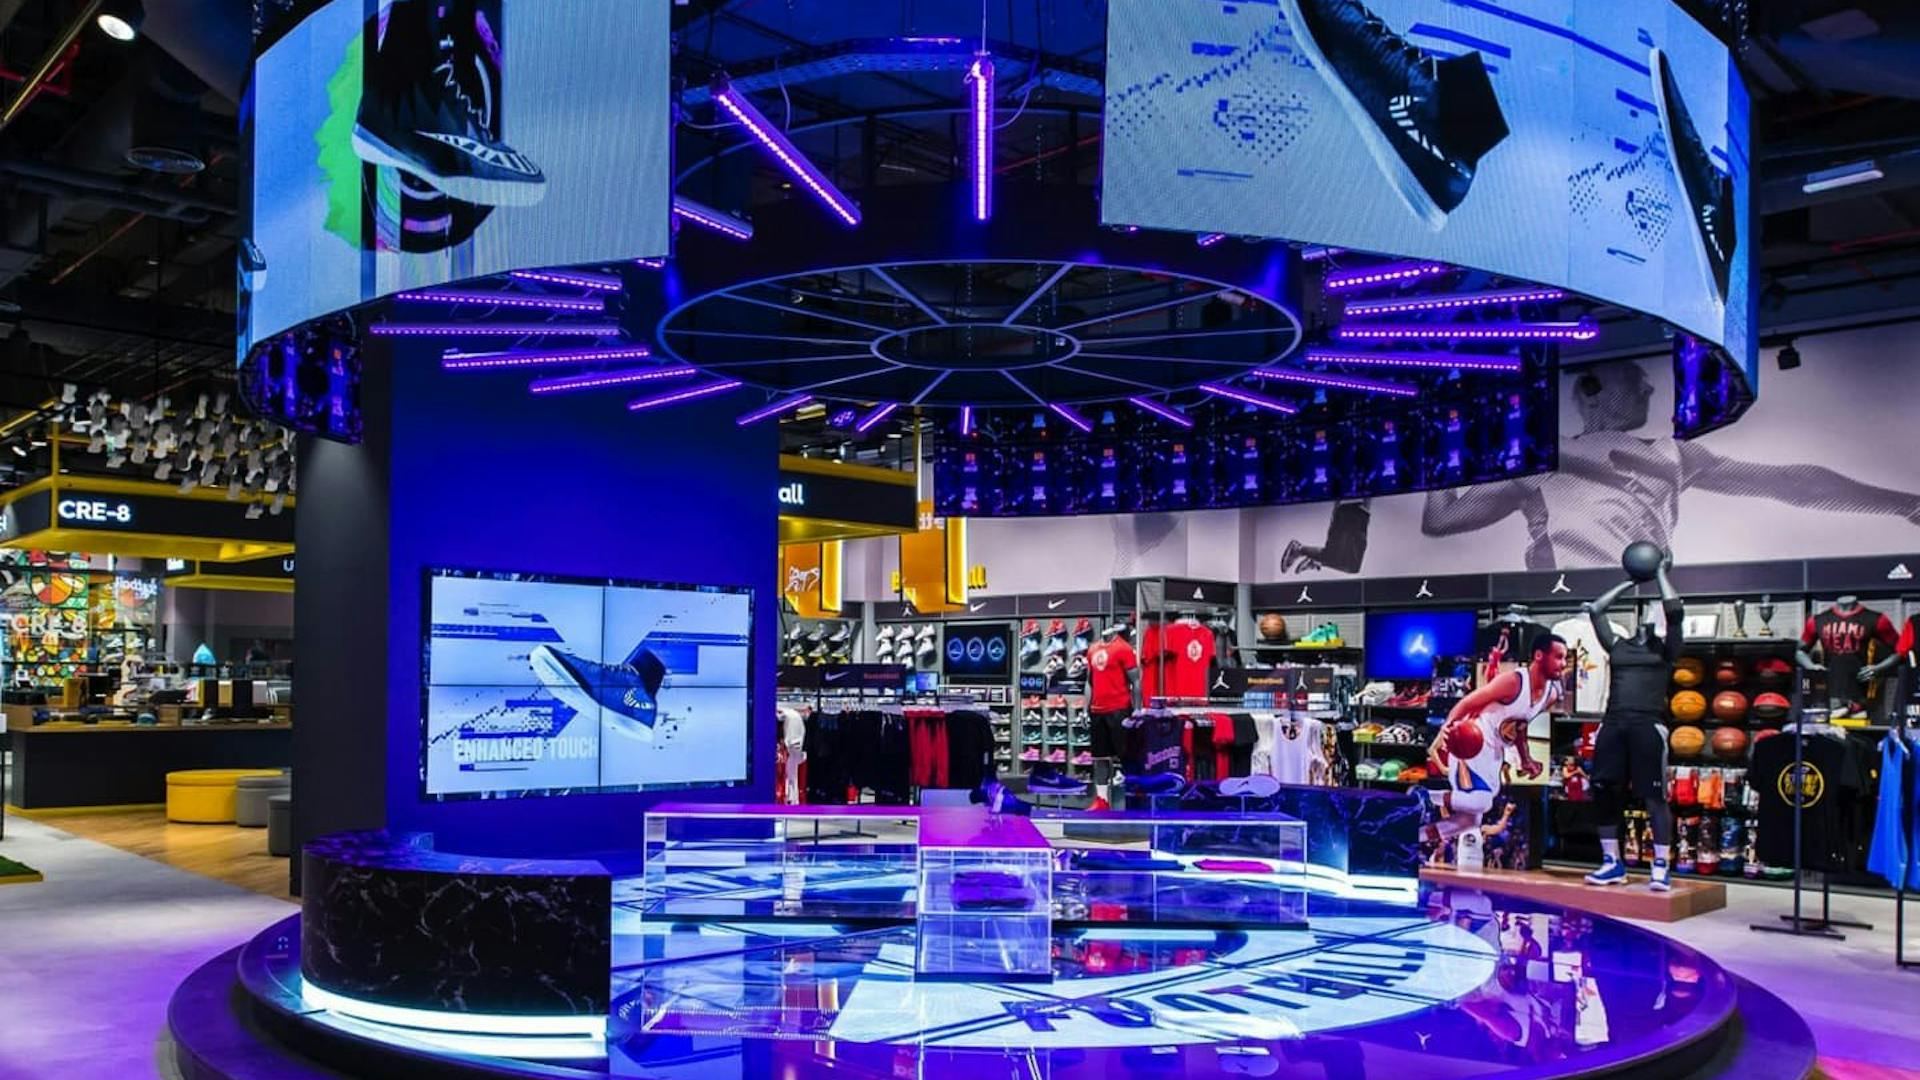 Digital Store Concept. Digital Store. Atlas flagship sport